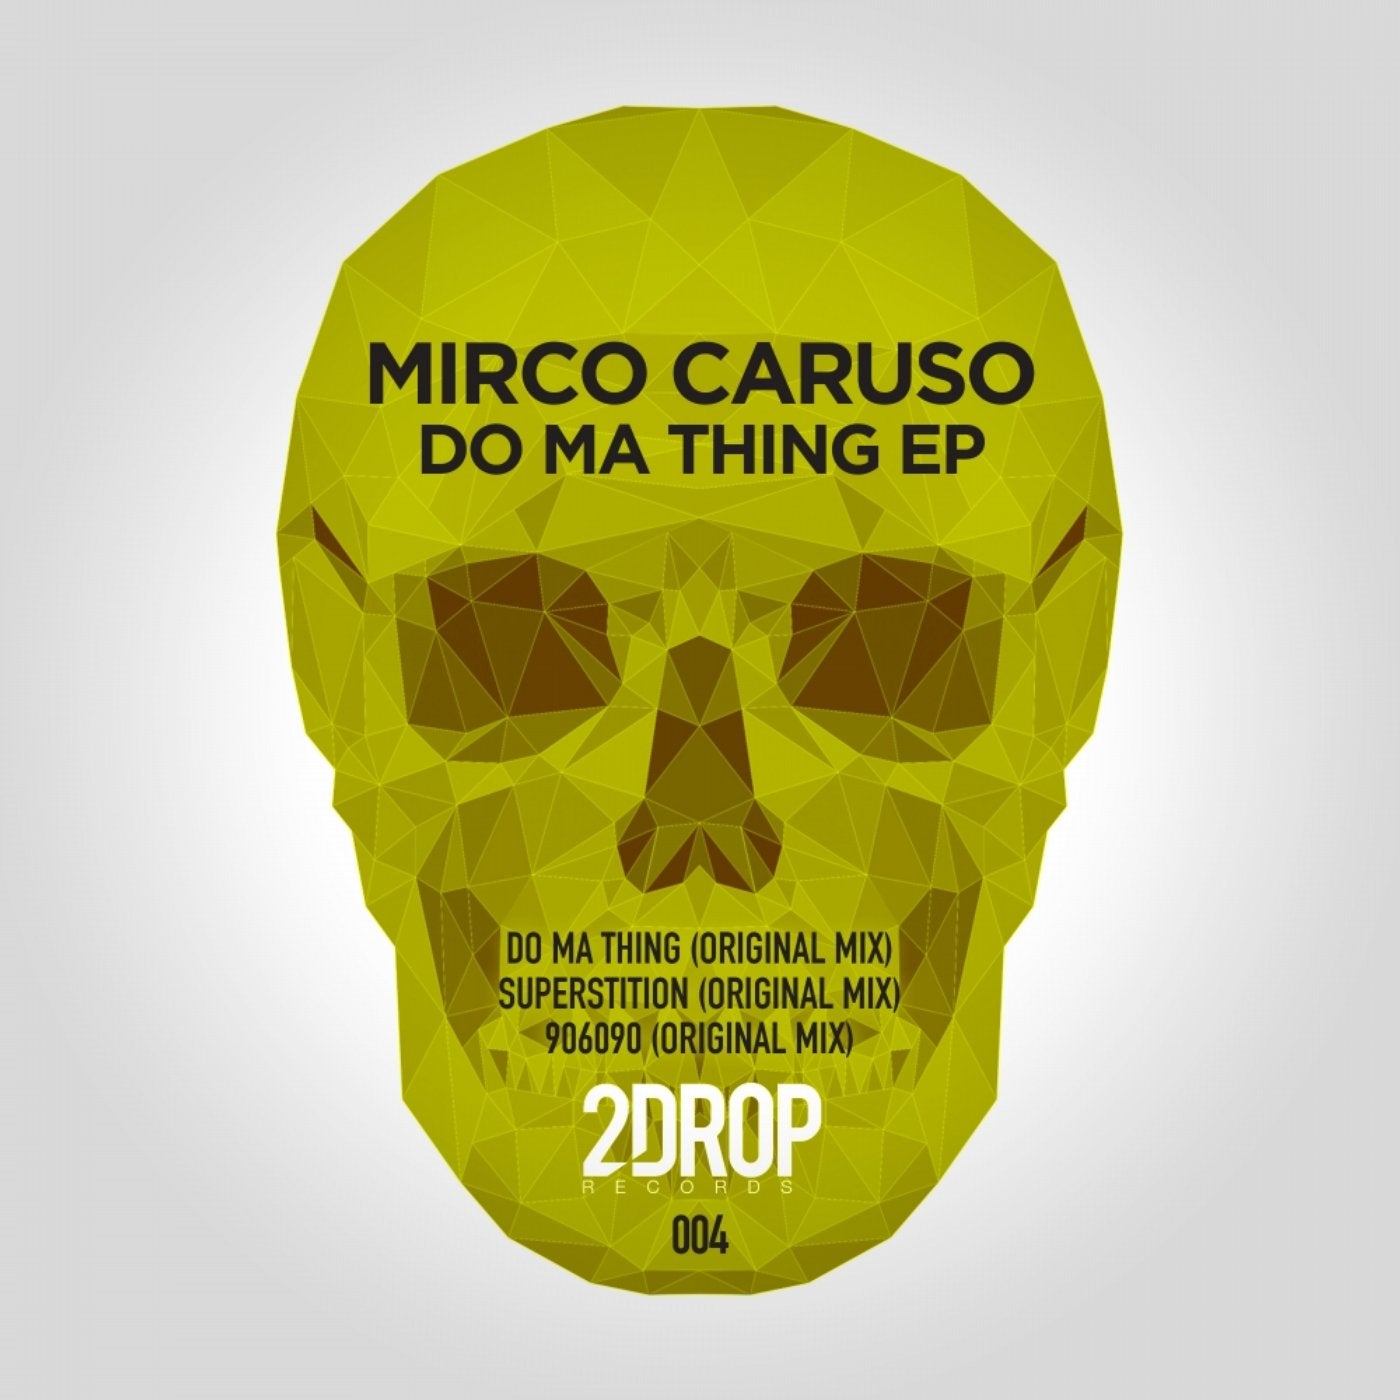 Original Mix. Original things. T+A Caruso. Keep Drop record. Things original mix